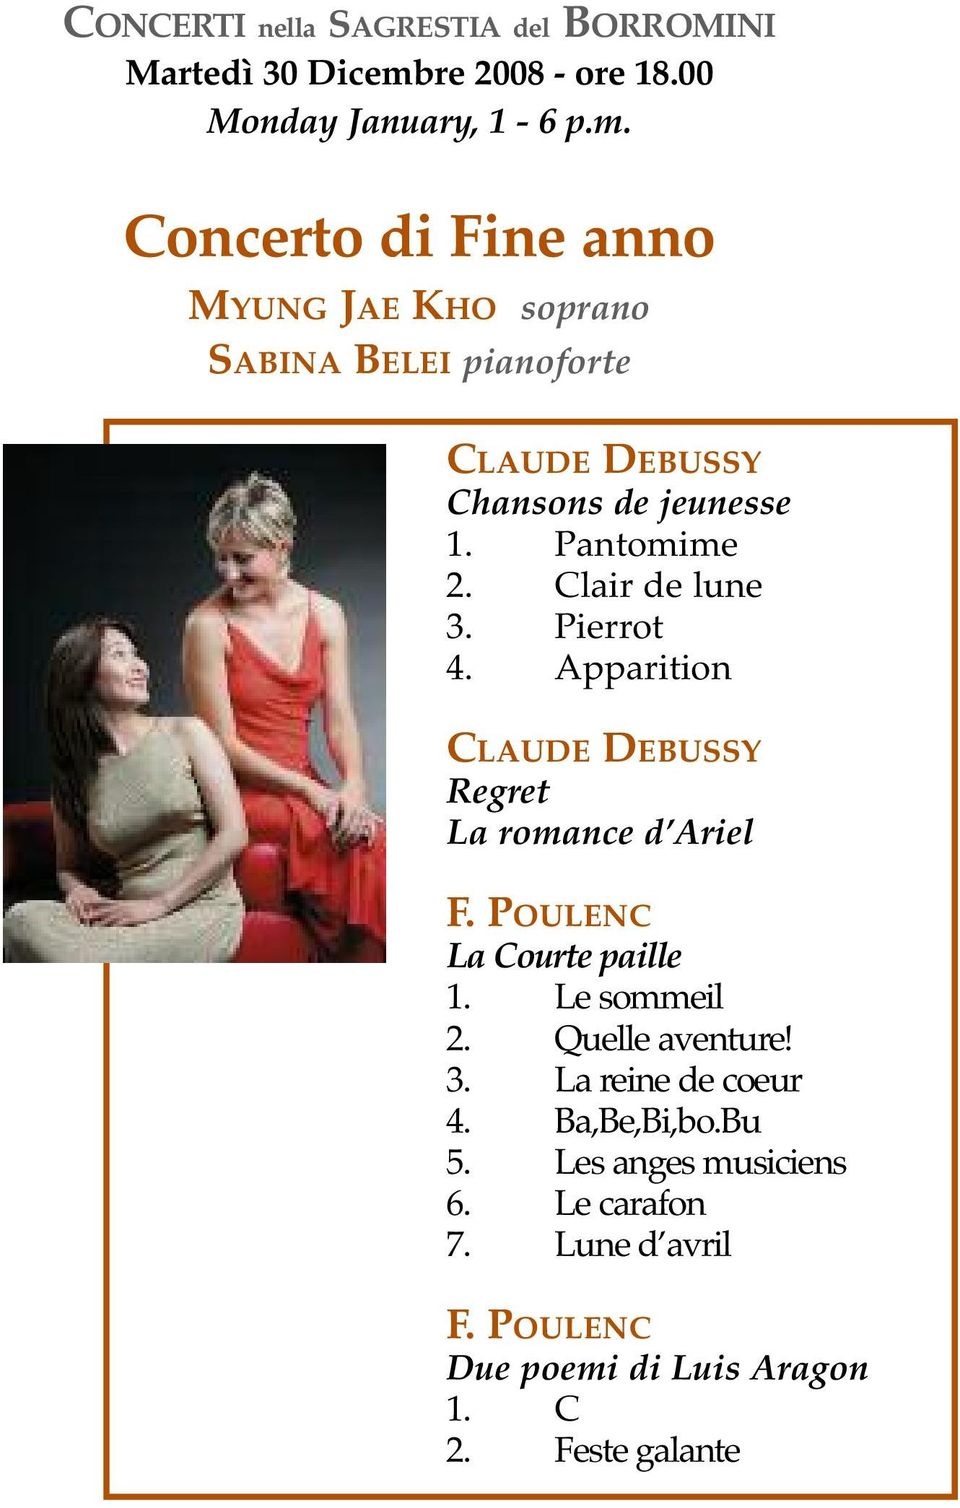 Concerto di Fine anno MYUNG JAE KHO soprano SABINA BELEI pianoforte CLAUDE DEBUSSY Chansons de jeunesse 1. Pantomime 2.